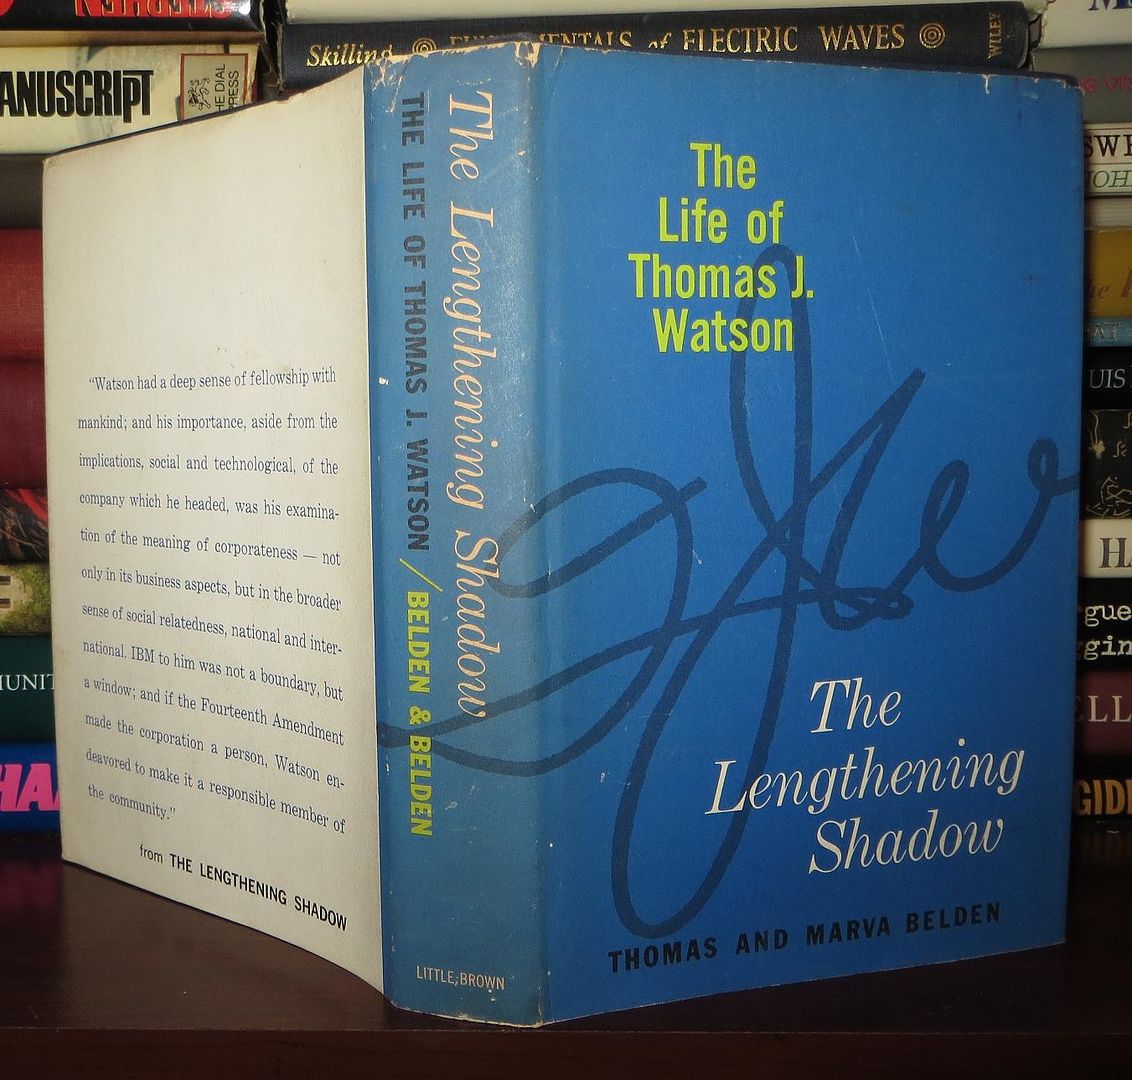 BELDEN, THOMAS GRAHAM; BELDEN, MARVA ROBINS - THOMAS J. WATSON - The Lengthening Shadow the Life of Thomas J. Watson